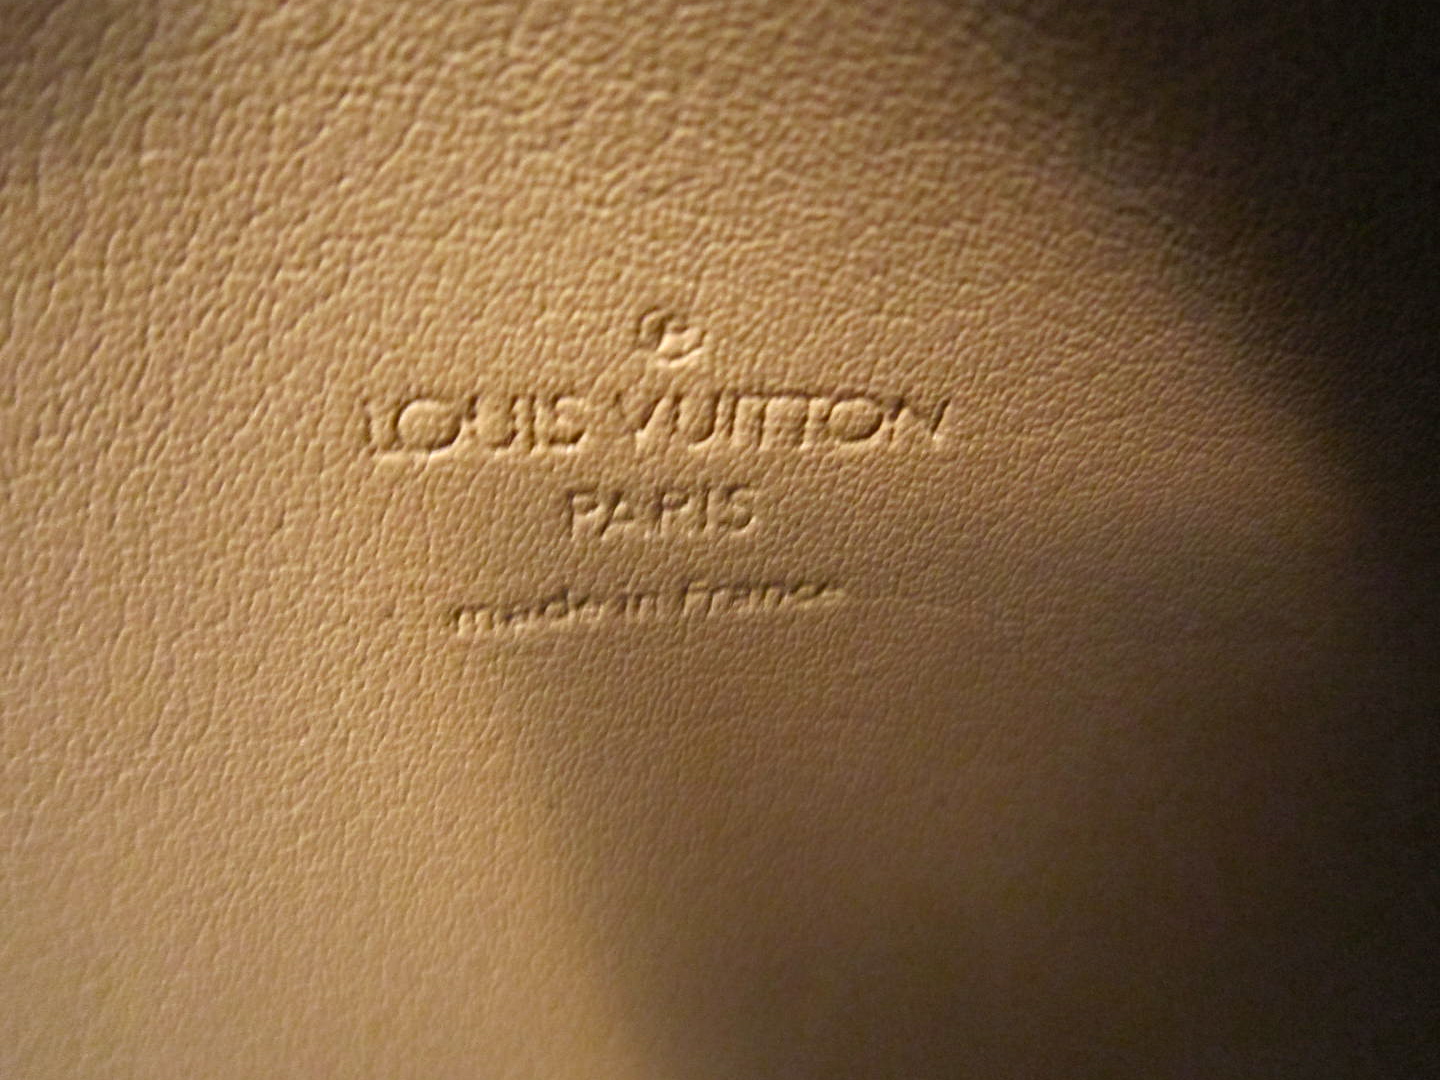 Louis Vuitton Papillon 30 Yellow Vernis Bag